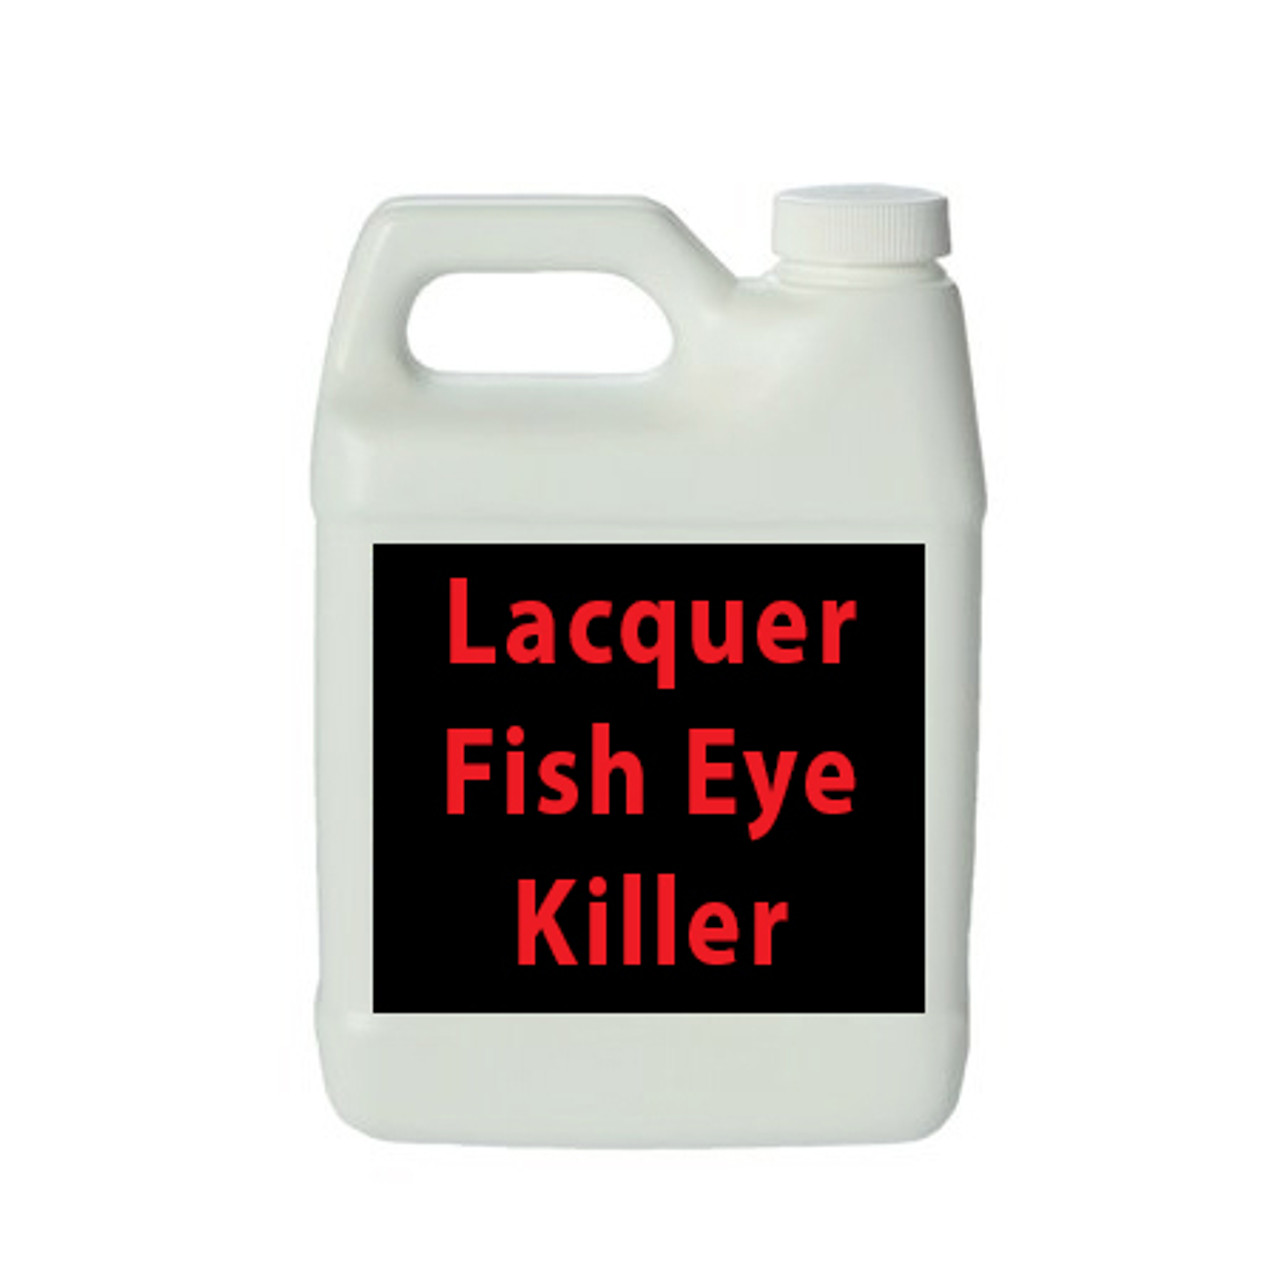 Professional Wood Finish Lacquer Fish Eye Killer Bottle